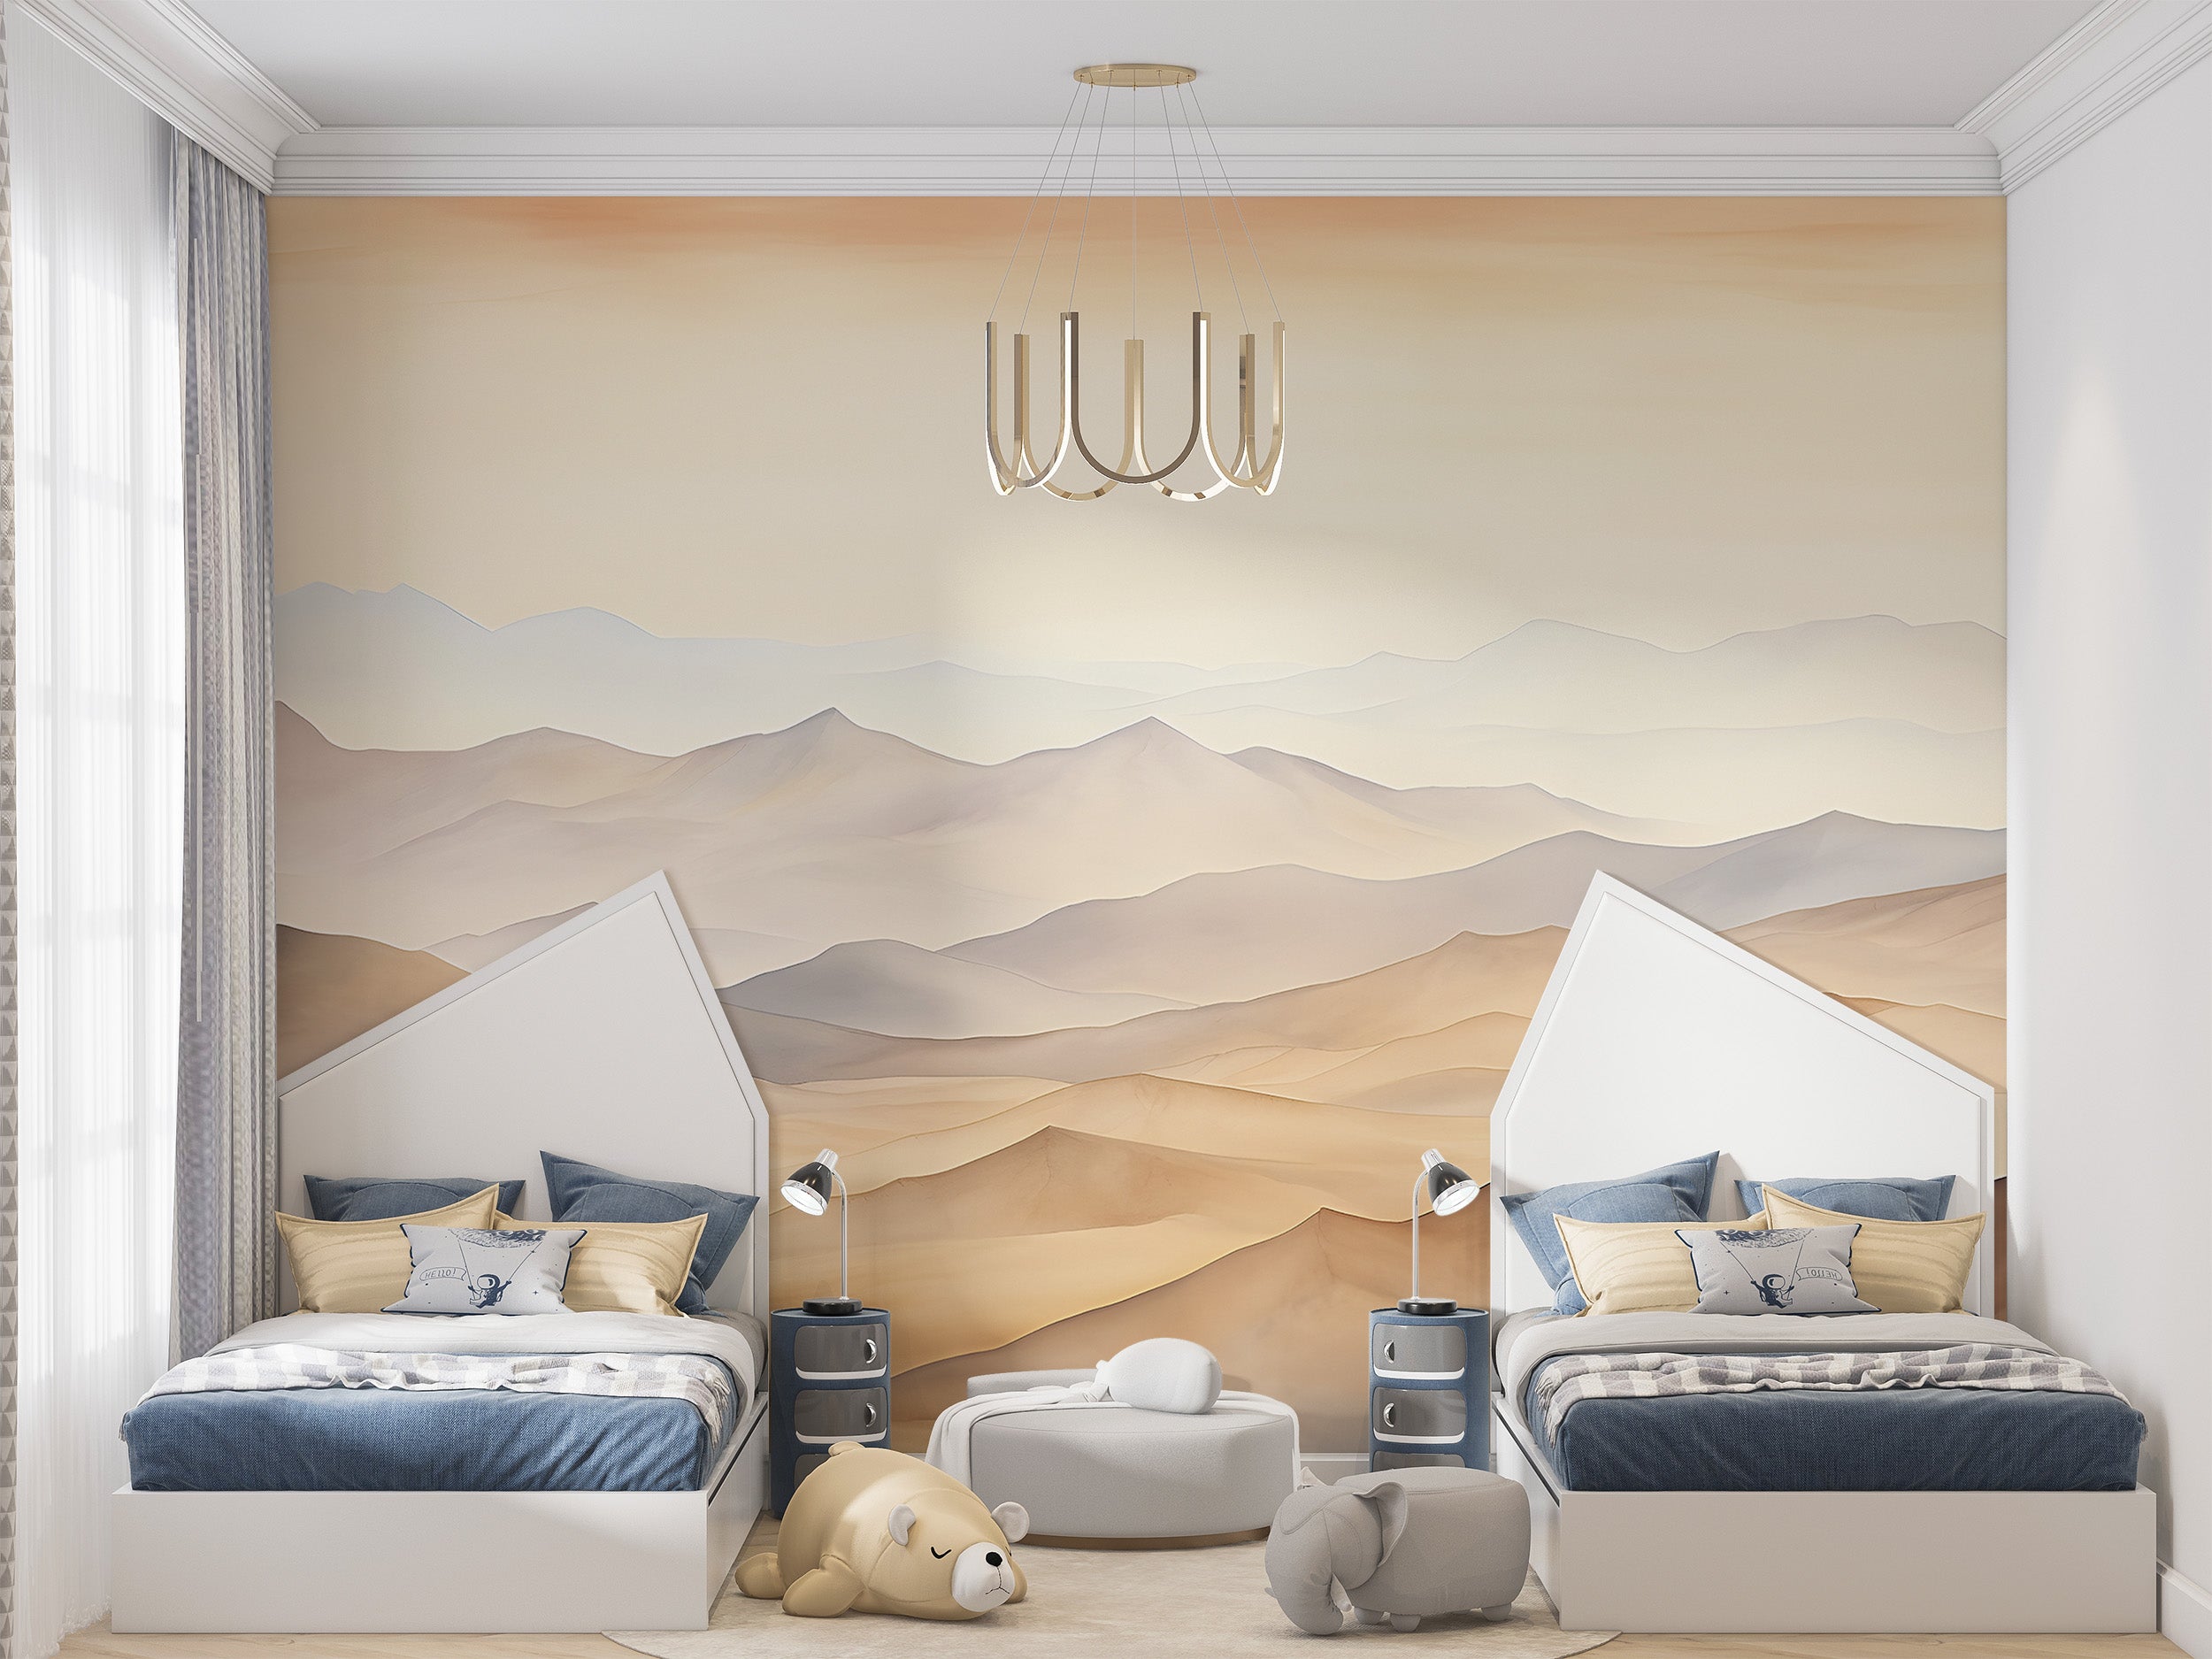 Invoke Serenity and Wonder with Desert Wall Art